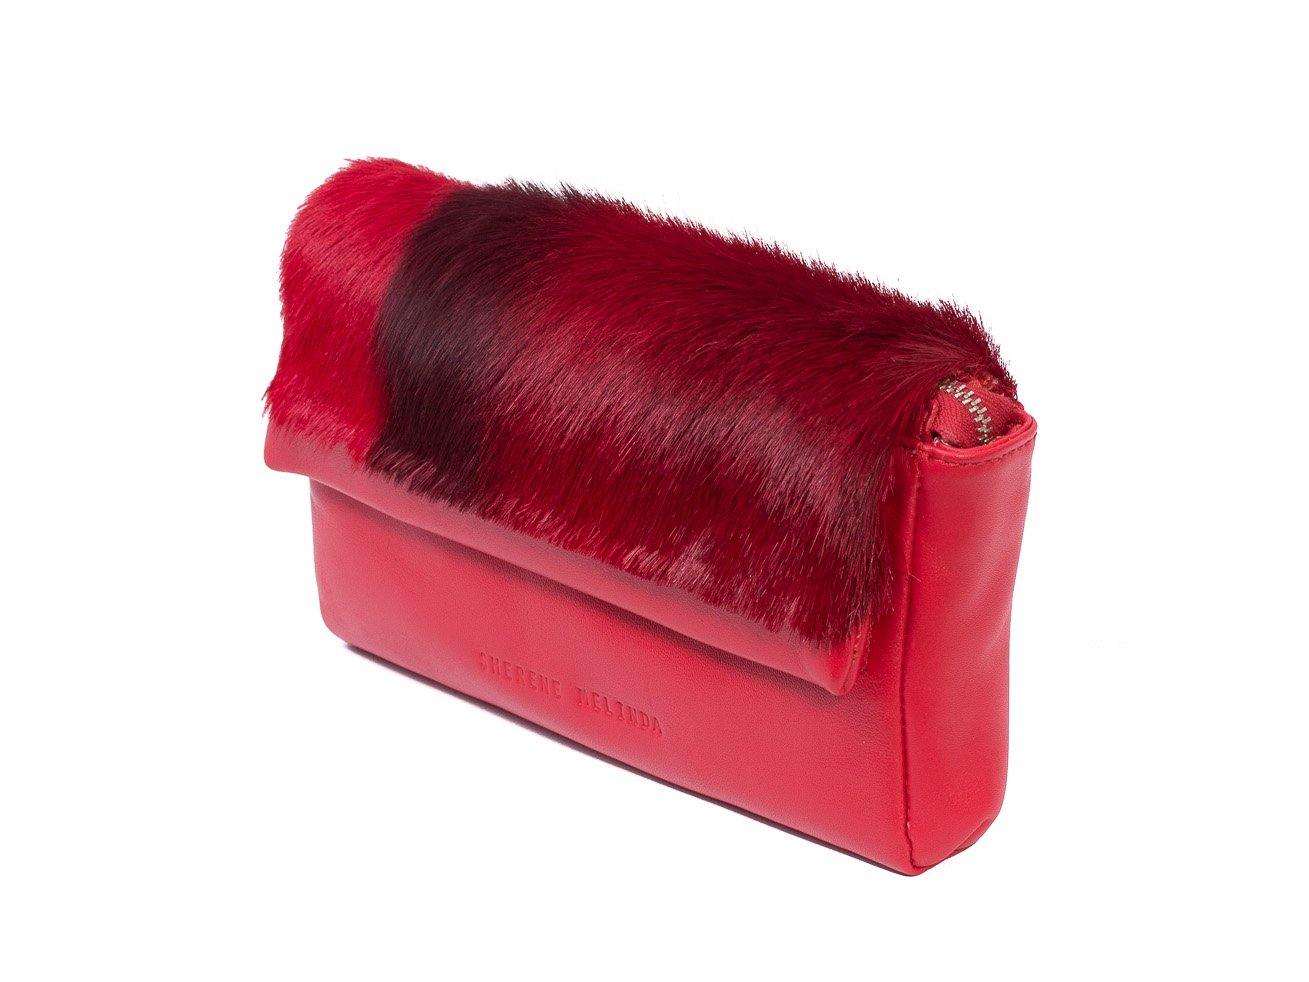 sherene melinda springbok hair-on-hide red leather Sophy SS18 Clutch Bag Stripe side angle